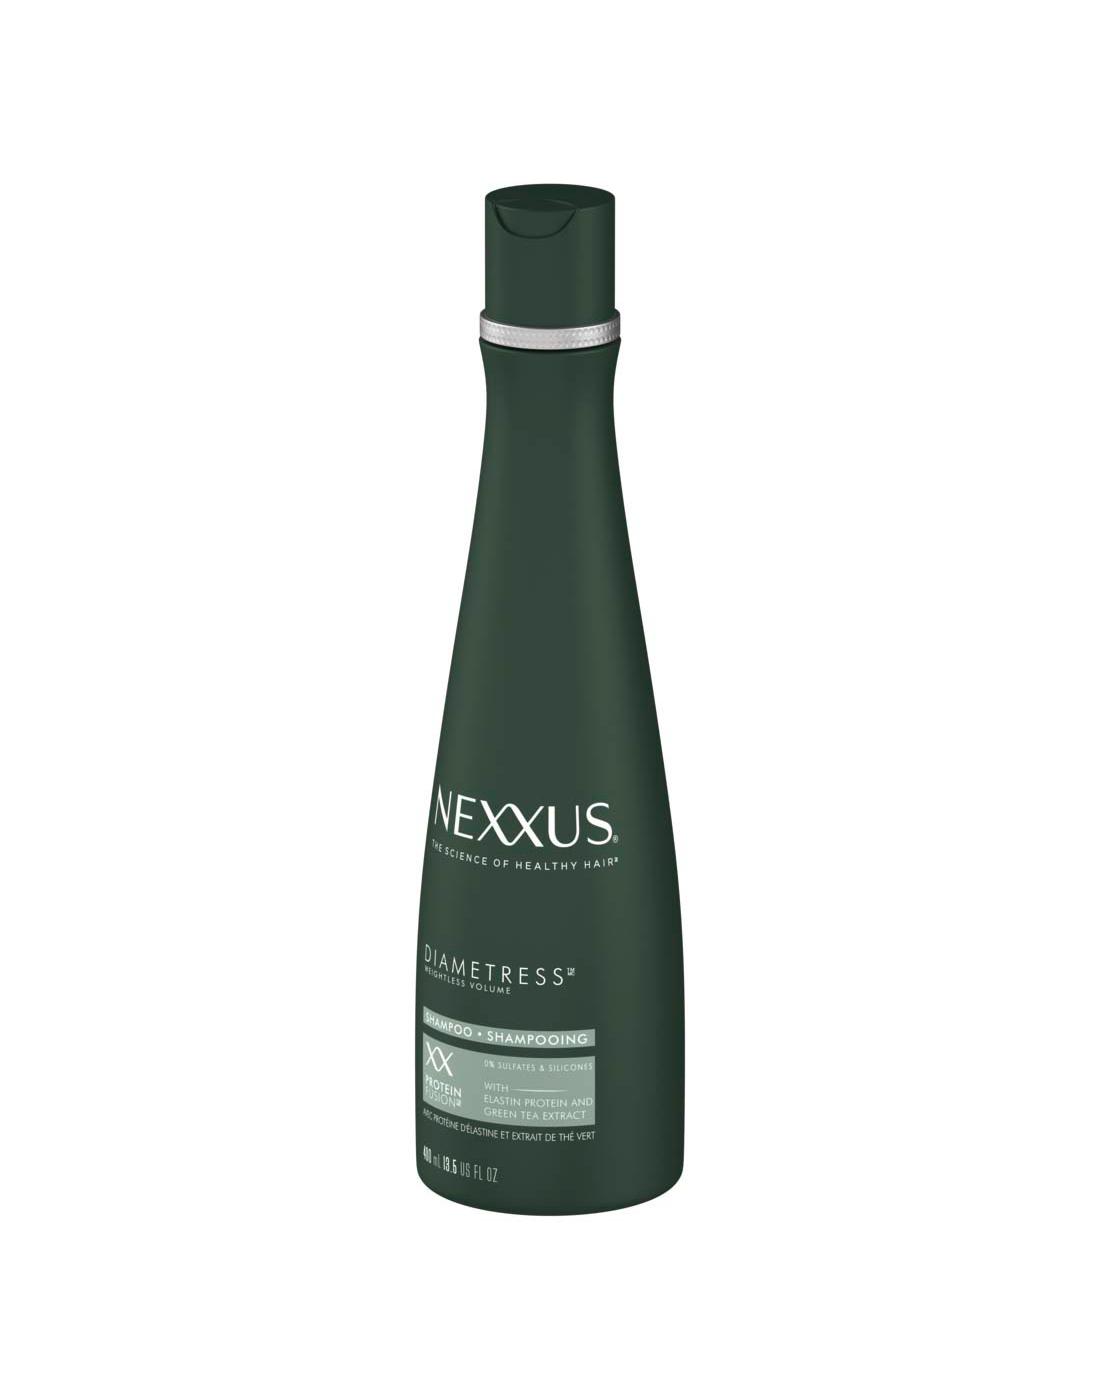 Nexxus Diametress Volumizing Shampoo; image 4 of 5